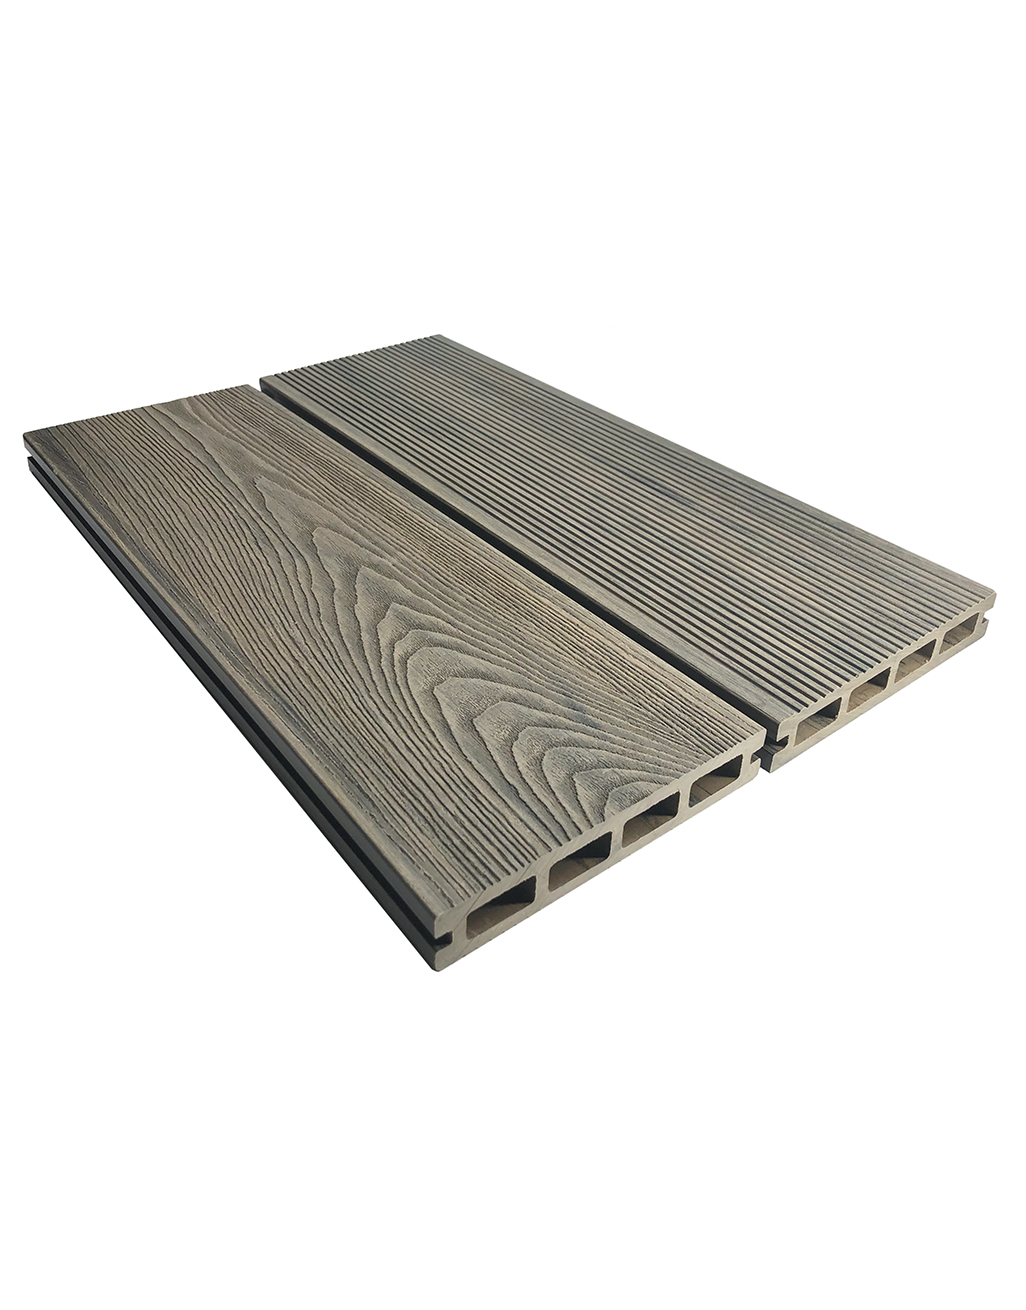 Composite Prime HD Deck 3D - Weathered Oak Composite Decking